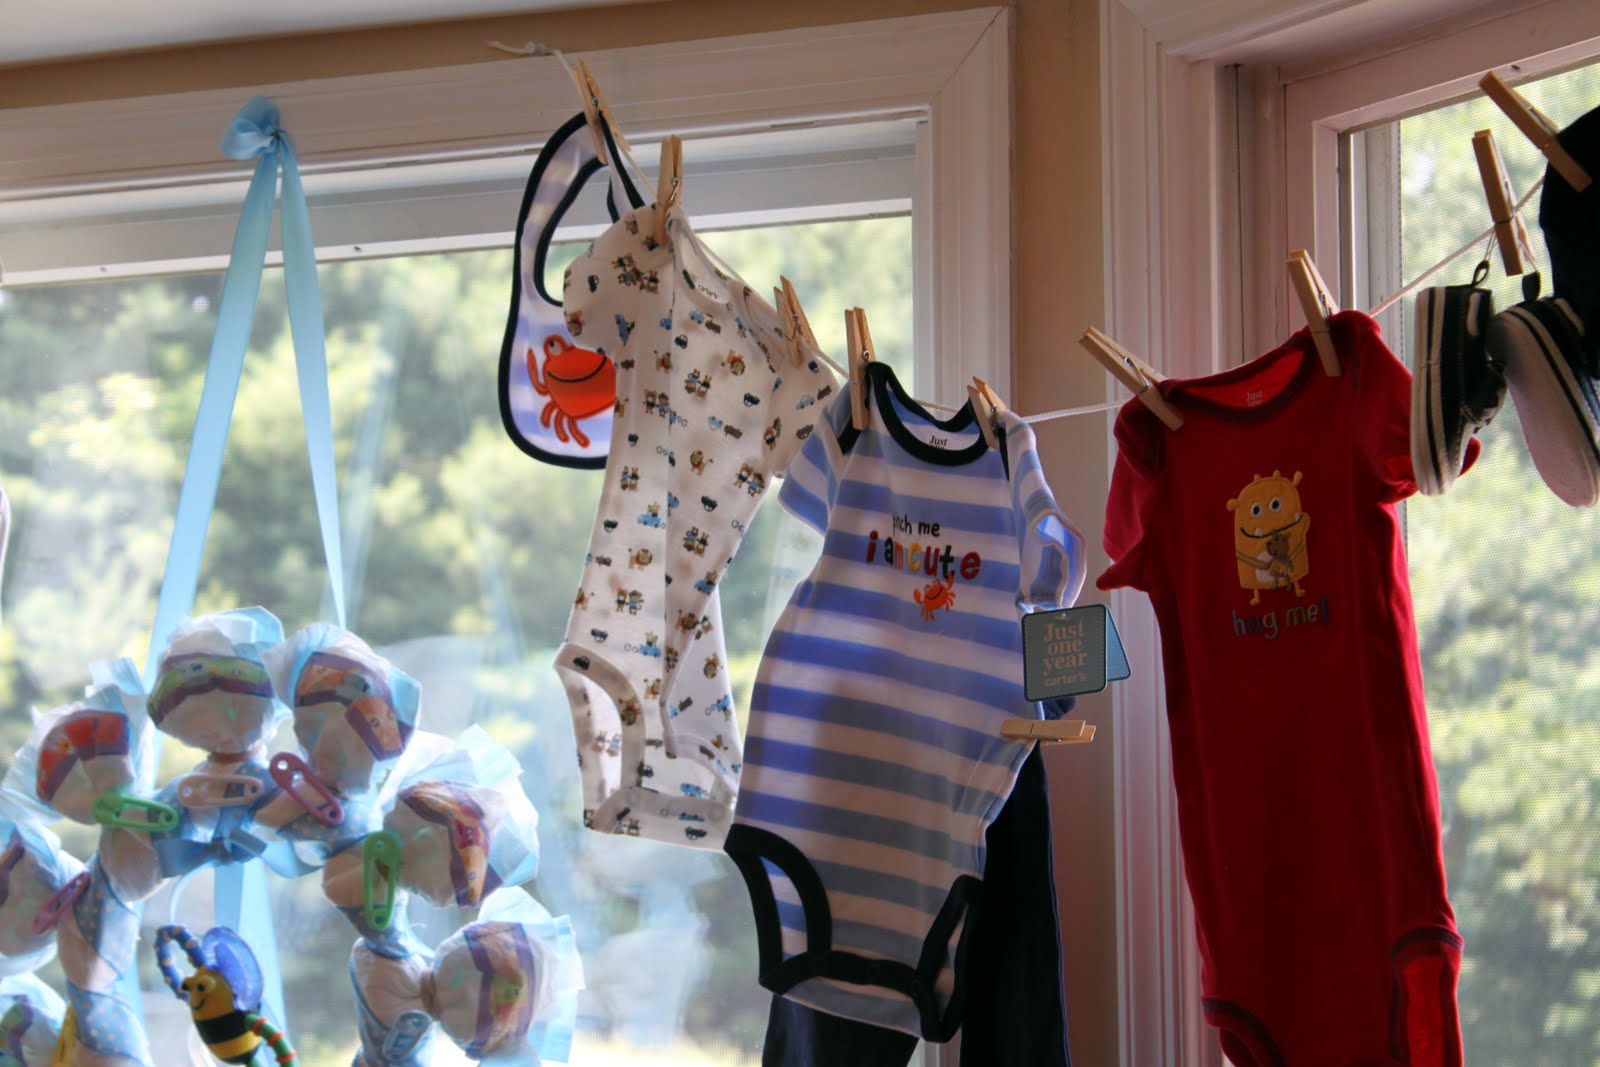 onesies on clothesline  Baby shower onesie, Baby shower